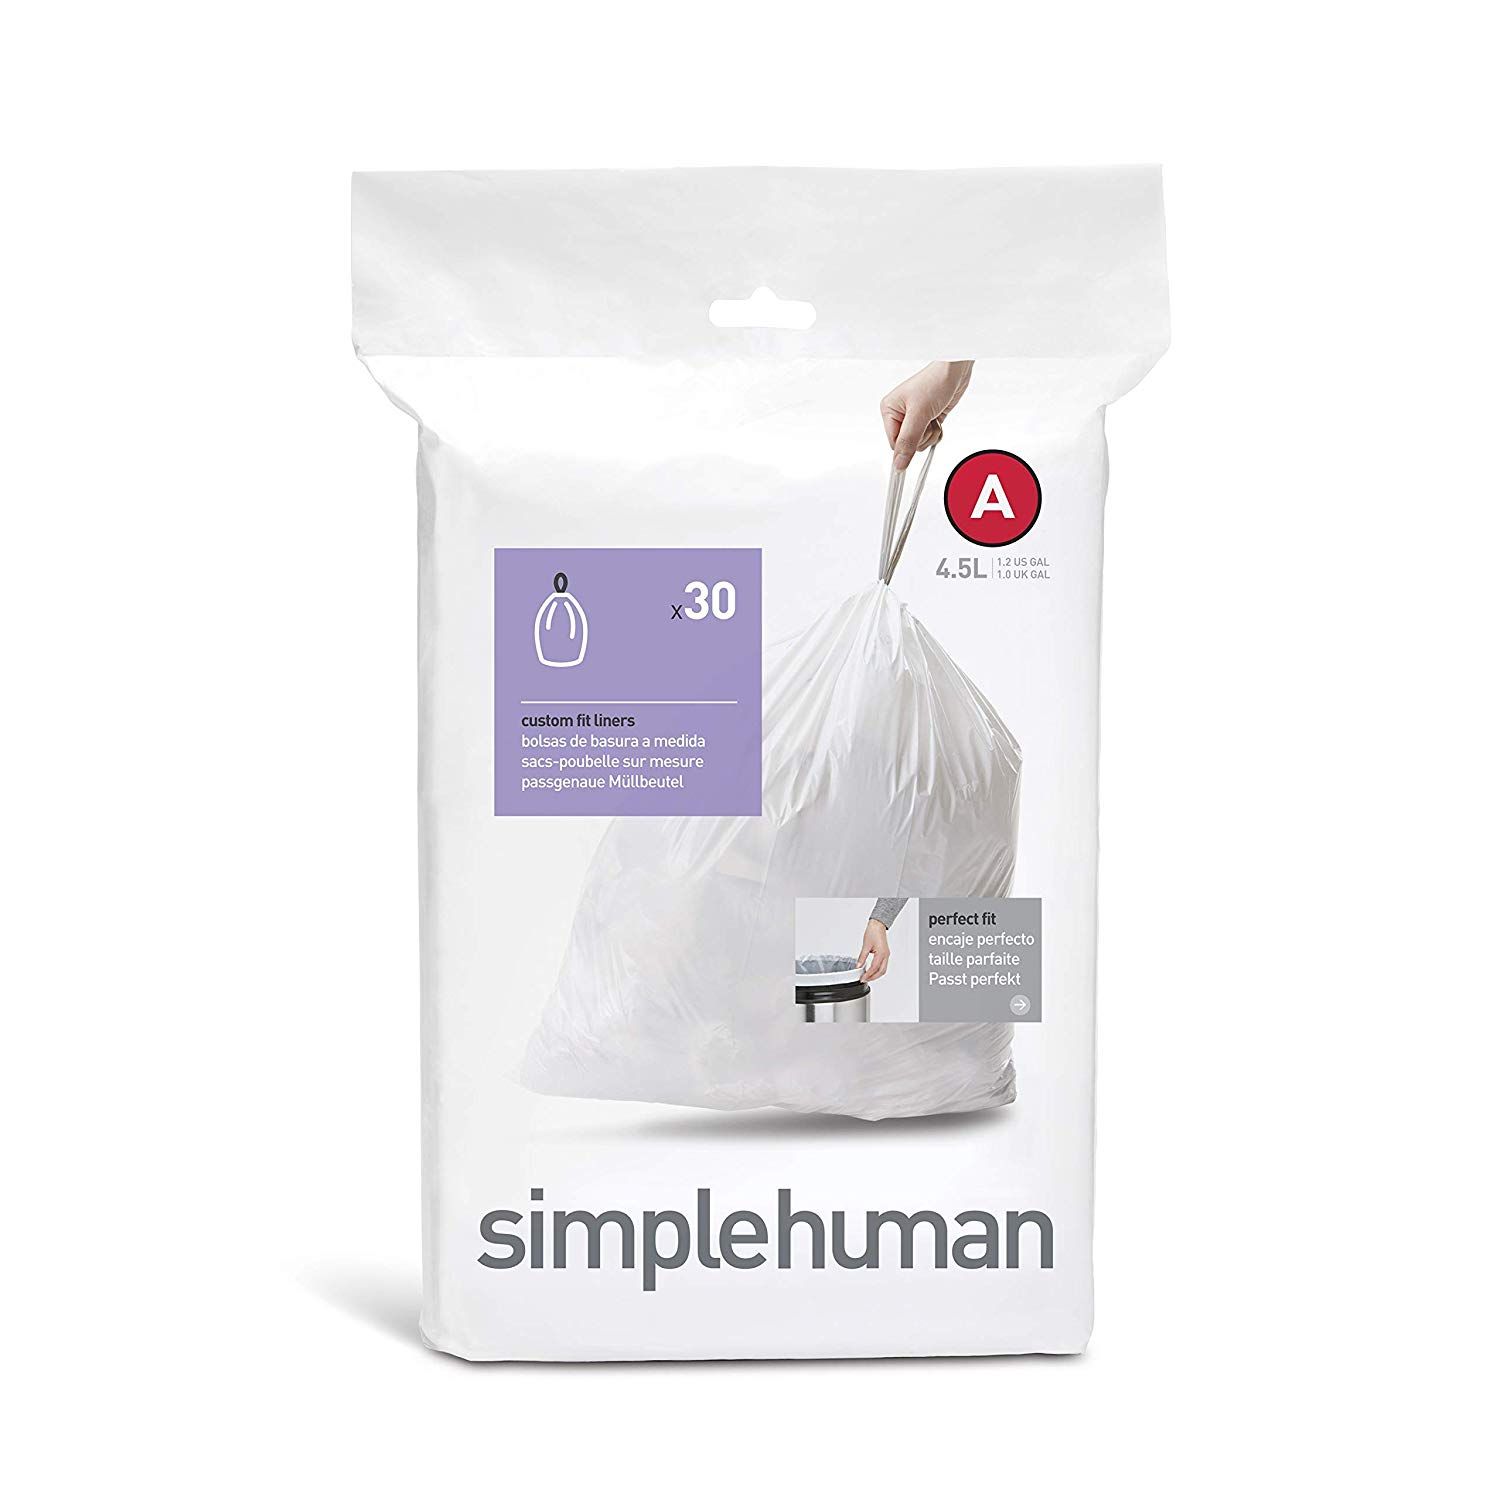 Amazon Essentials SimpleHuman қоқыс салғыштары ақ түсті